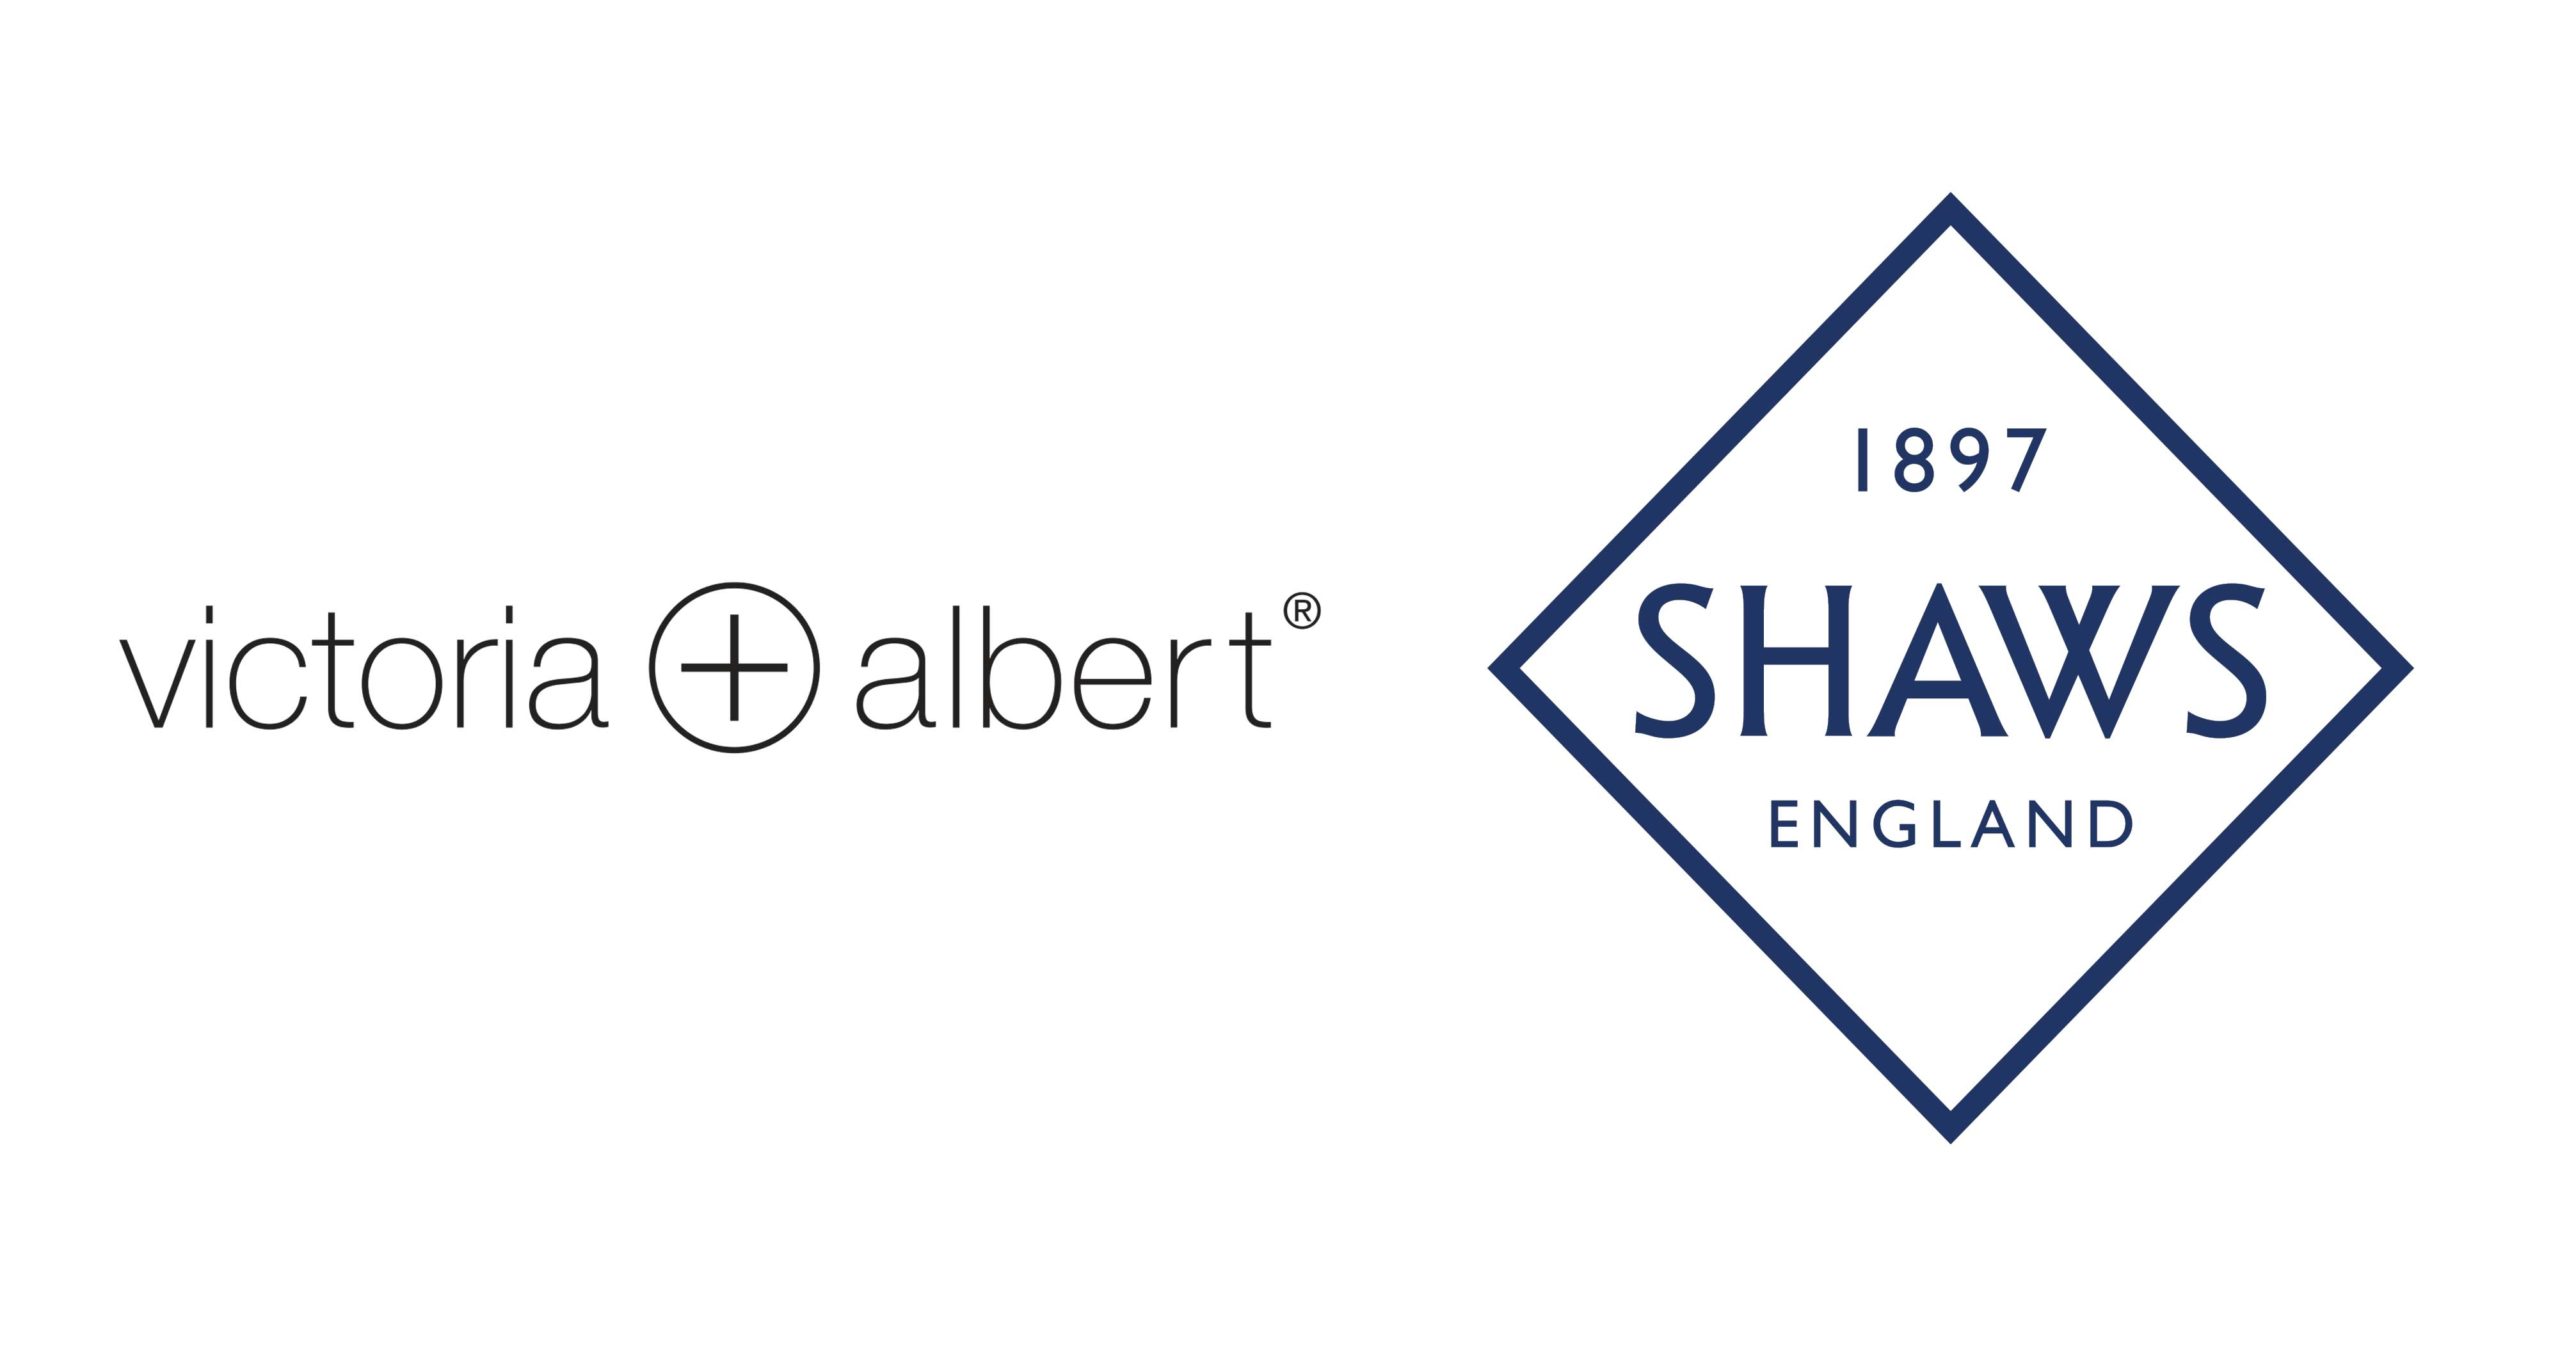 Victoria & Albert and Shaws logos